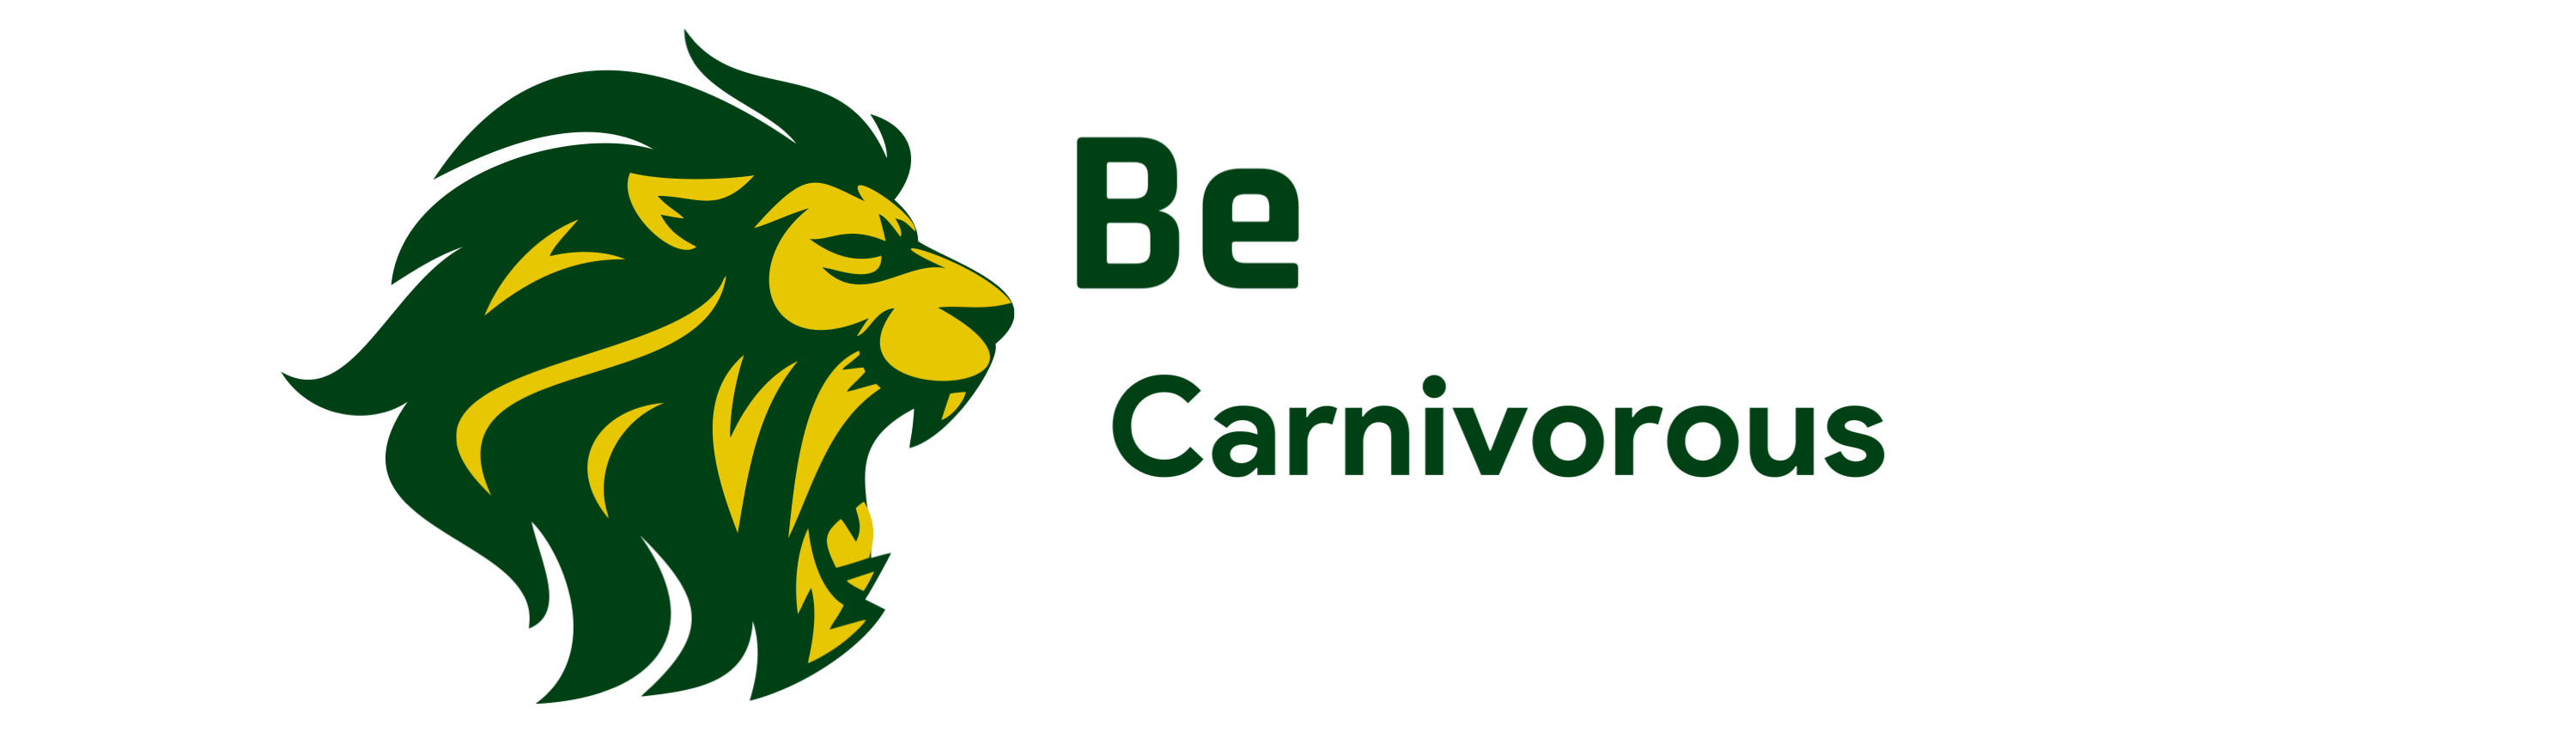 Be Carnivorous